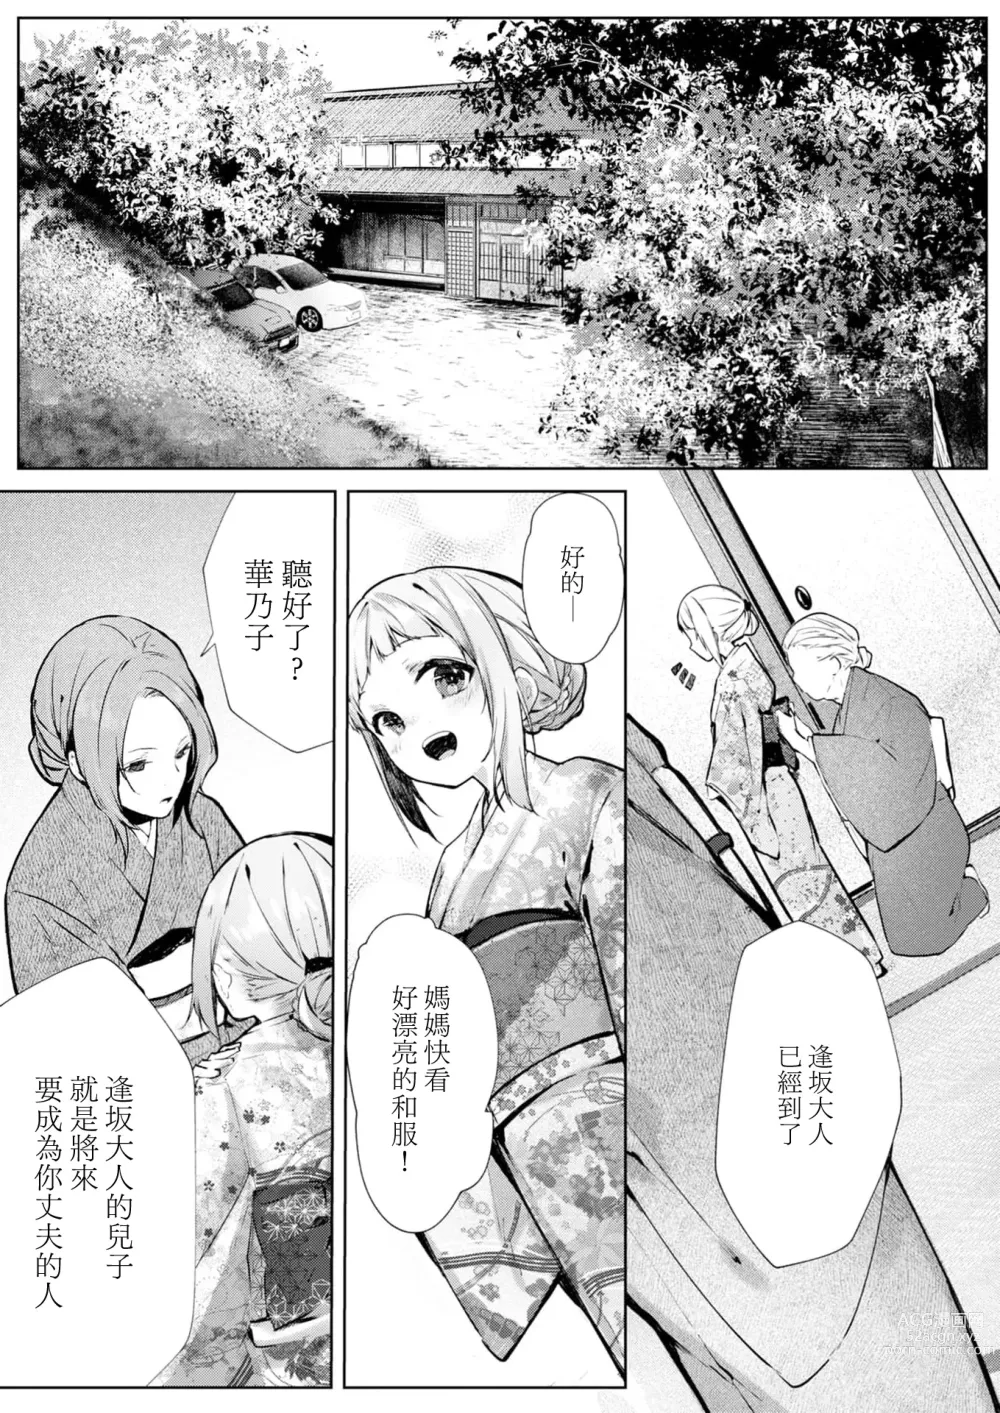 Page 2 of manga 与极致温柔丈夫的新婚生活并不如意 1